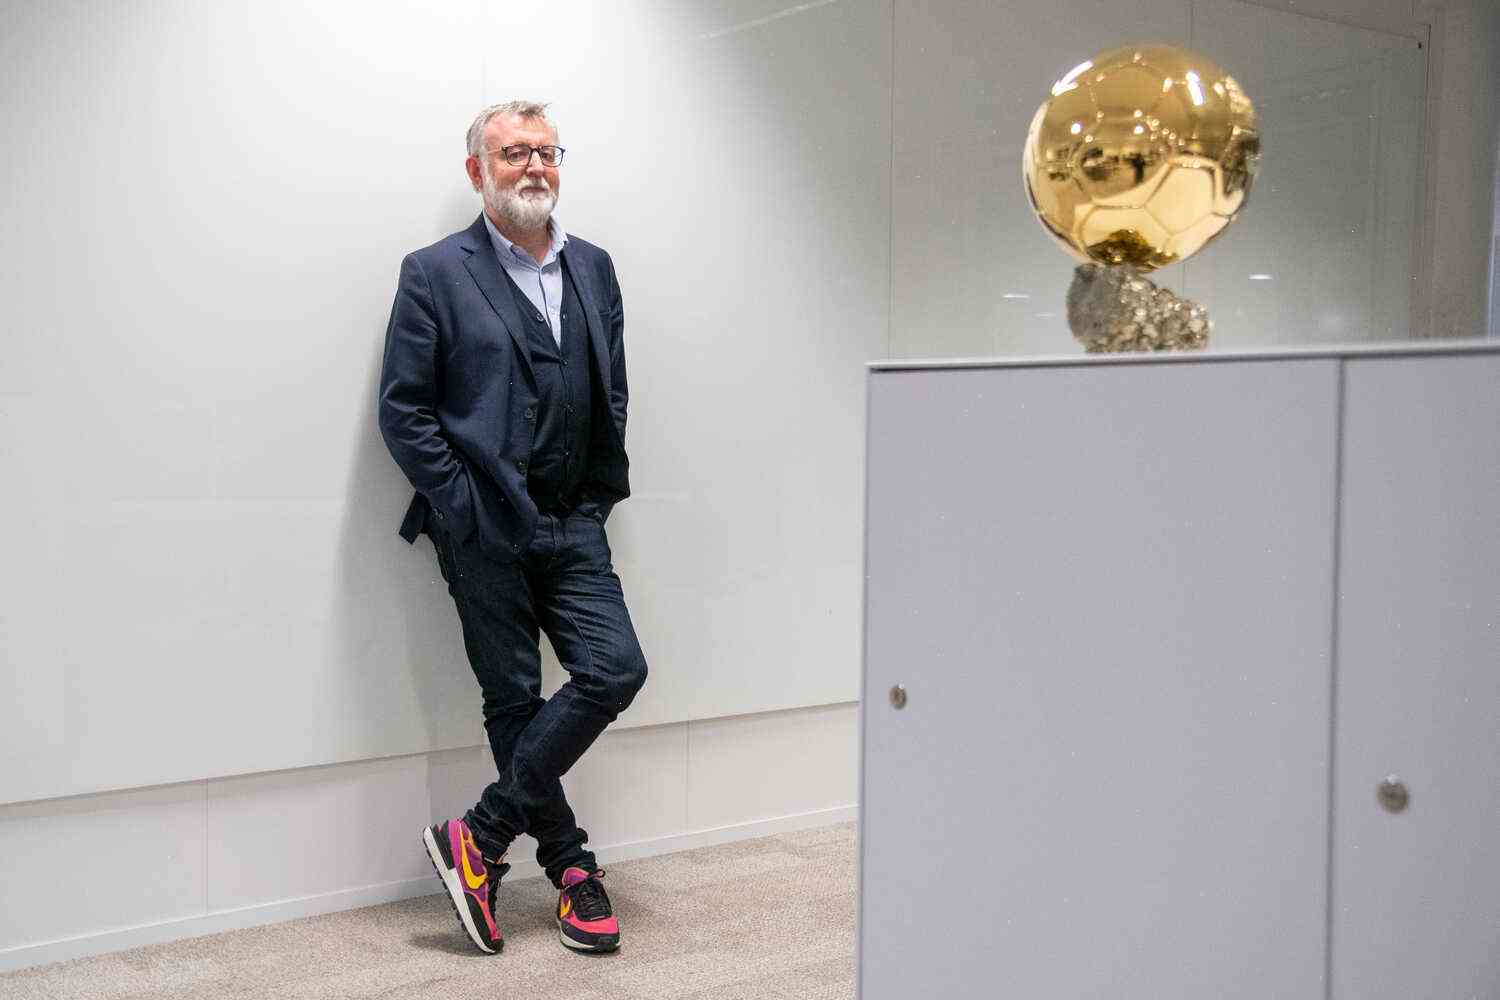 Ballon d'Or: Germany's Mario Goetze remembers secret vote